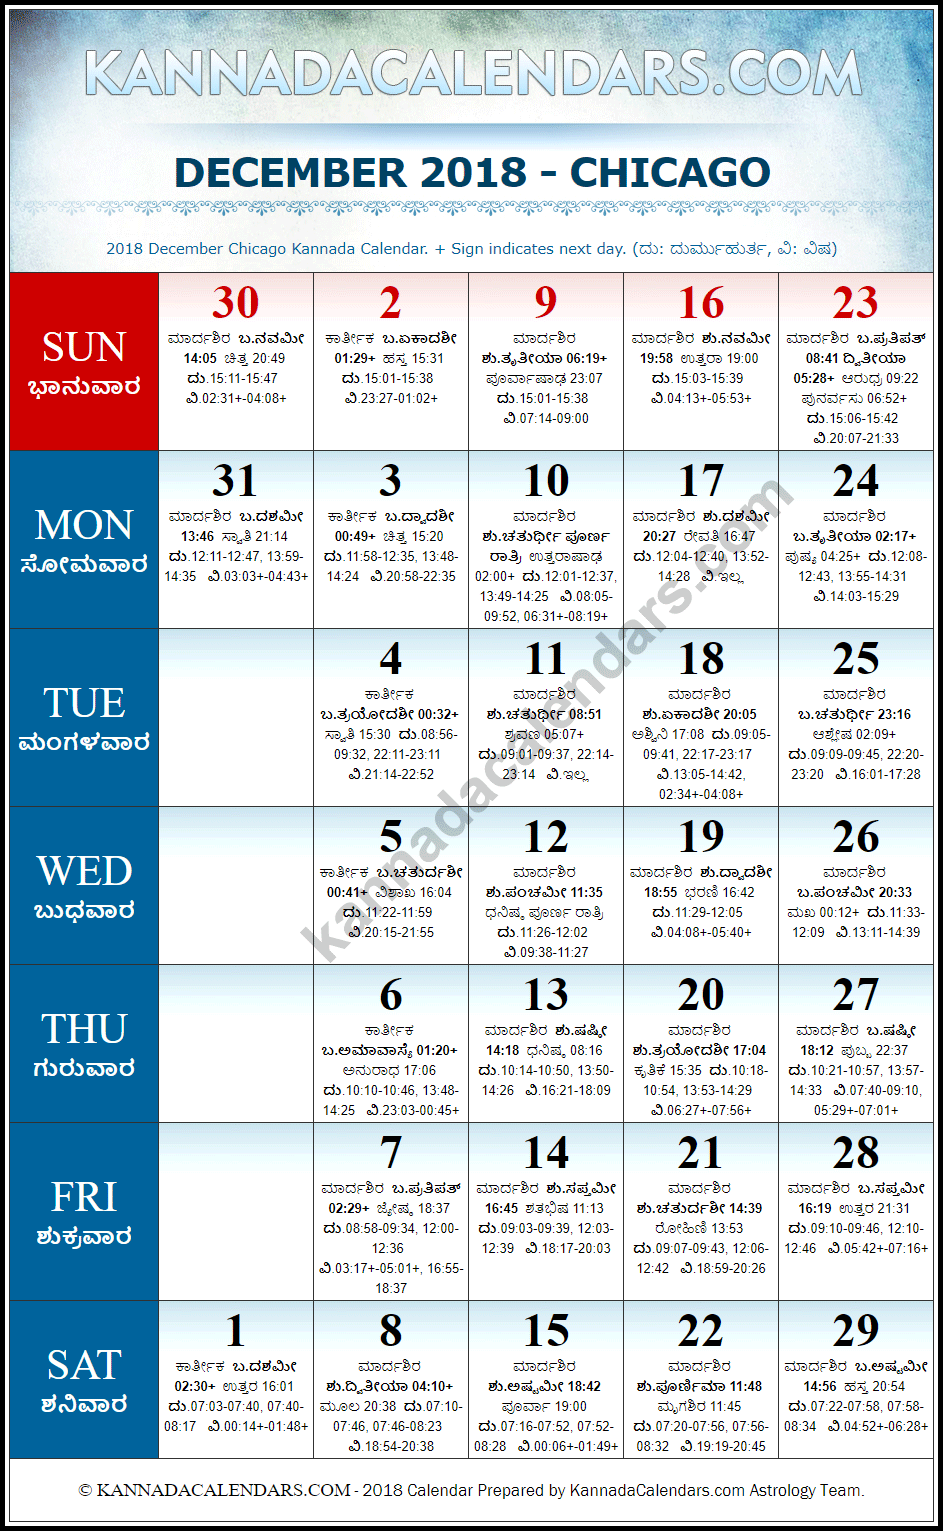 December 2018 Kannada Calendar for Chicago, USA